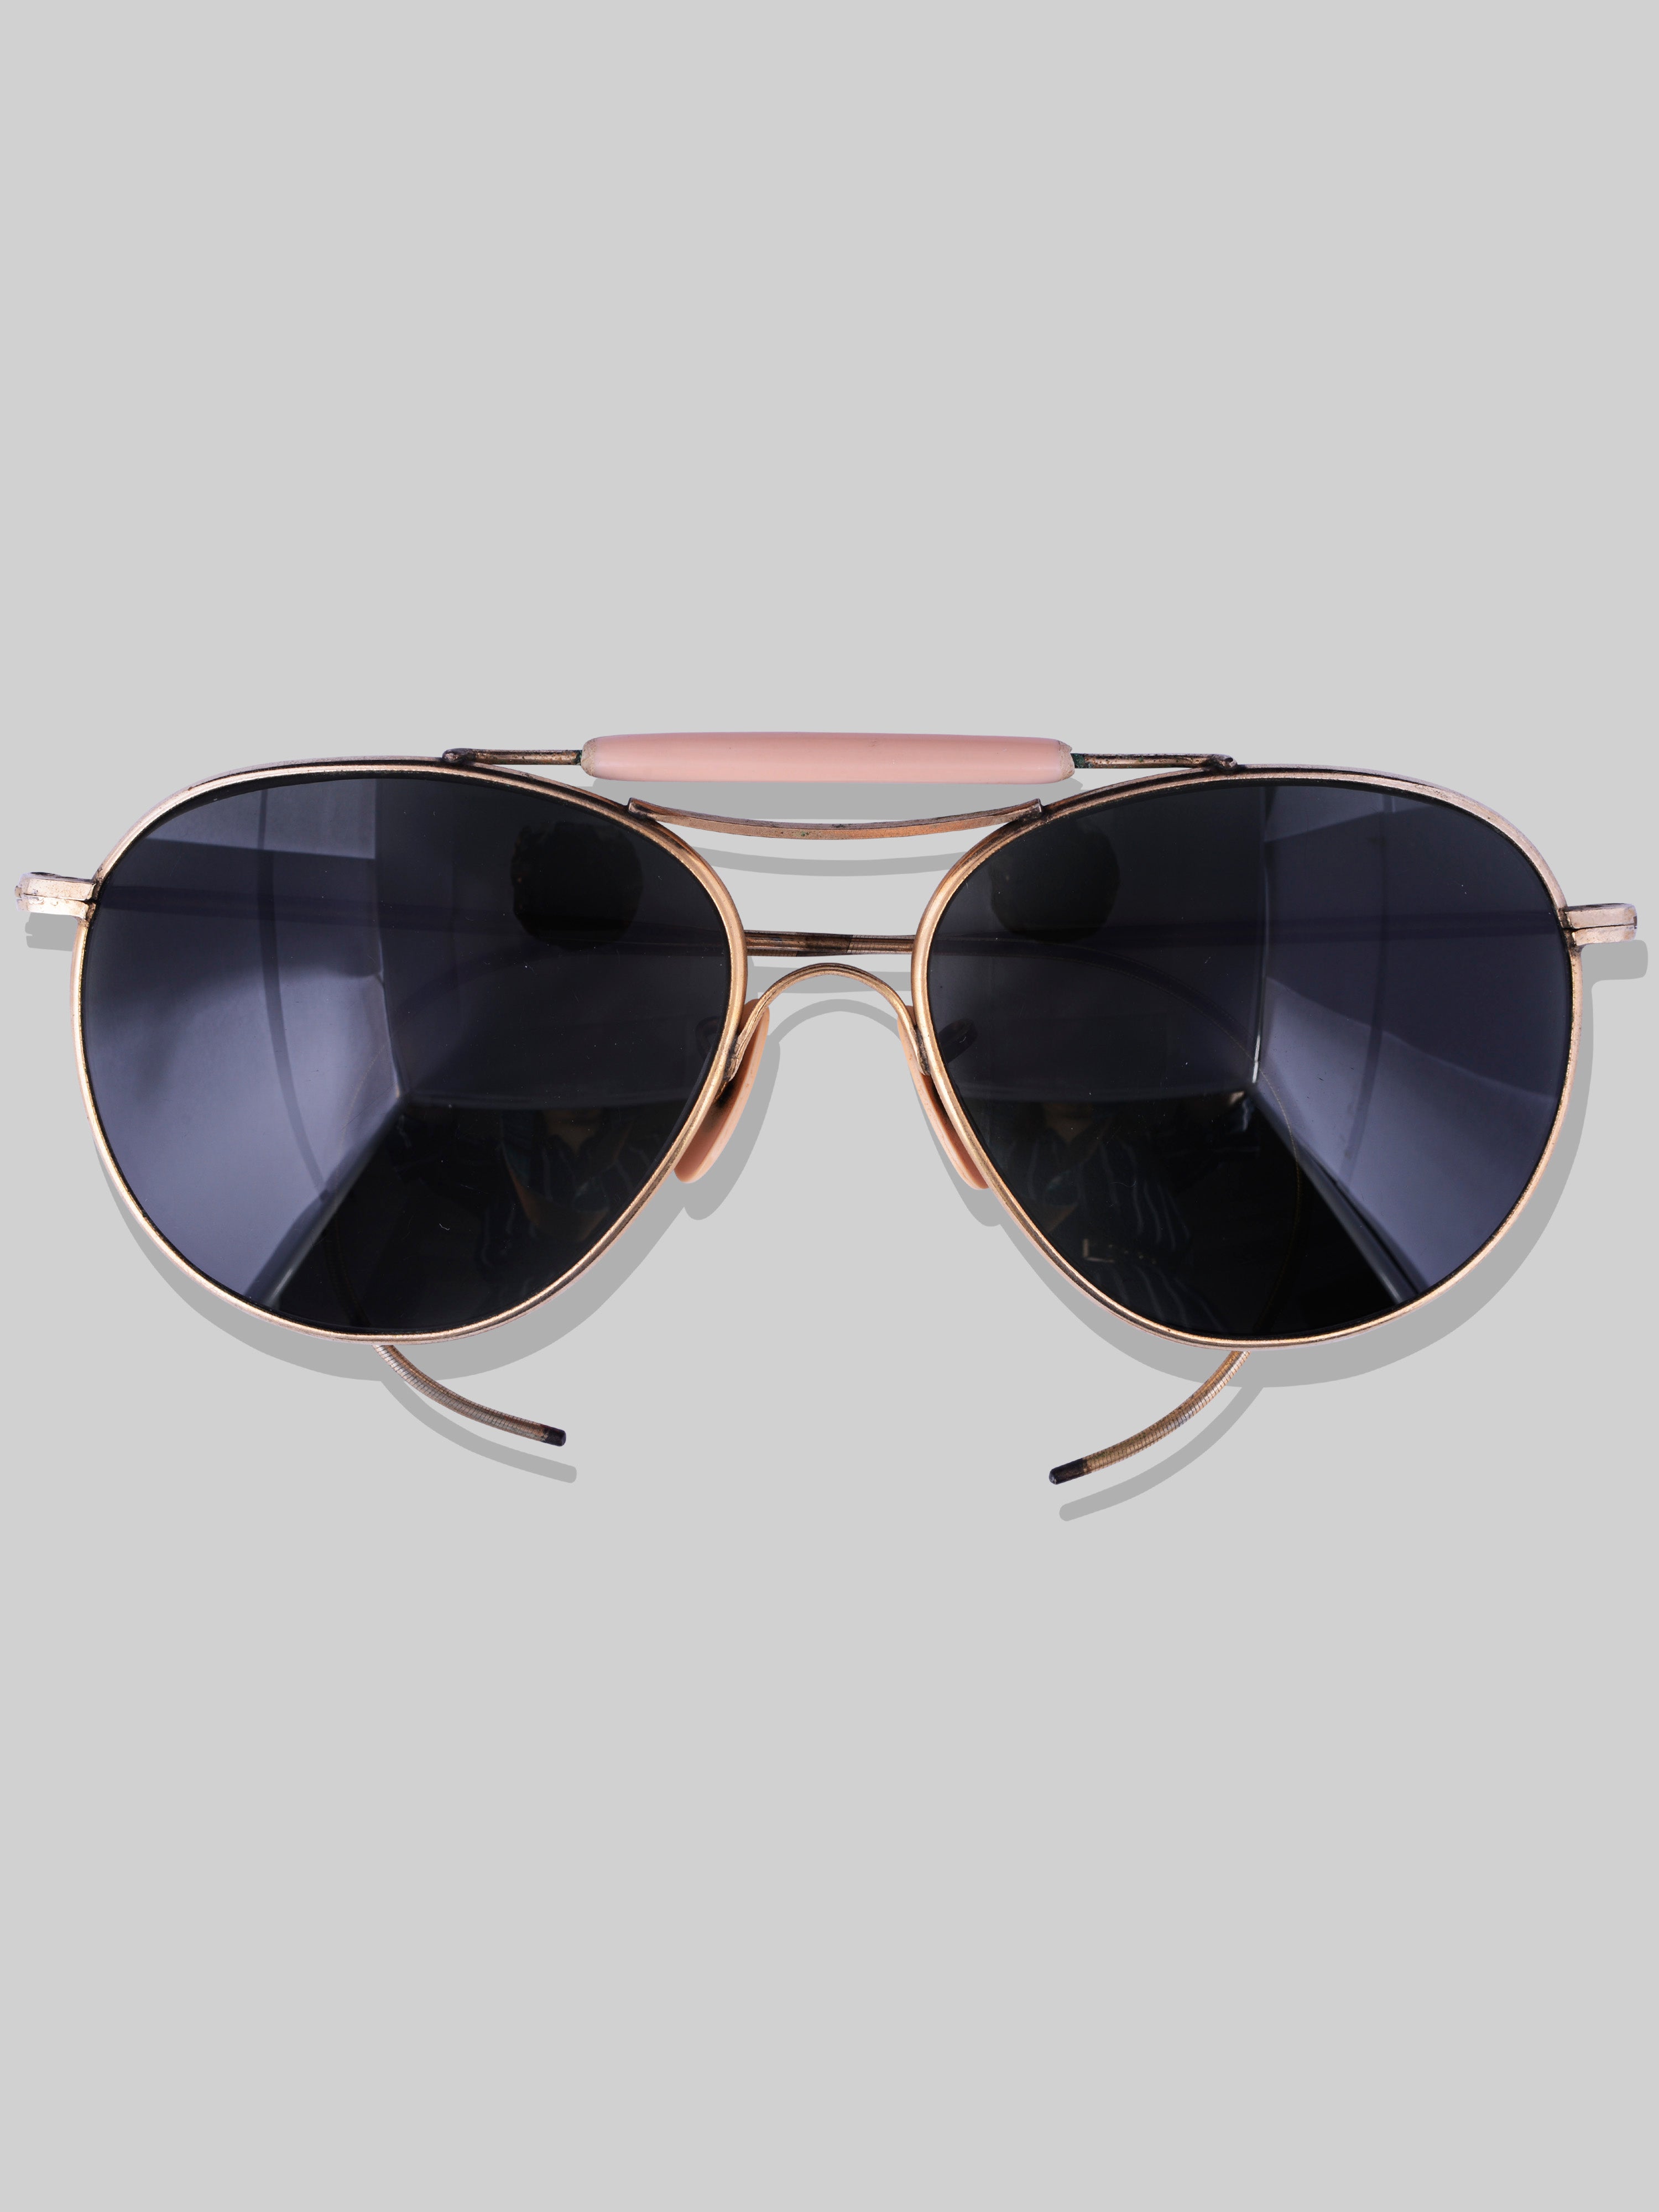 1940's American Optical Aviator Sunglasses